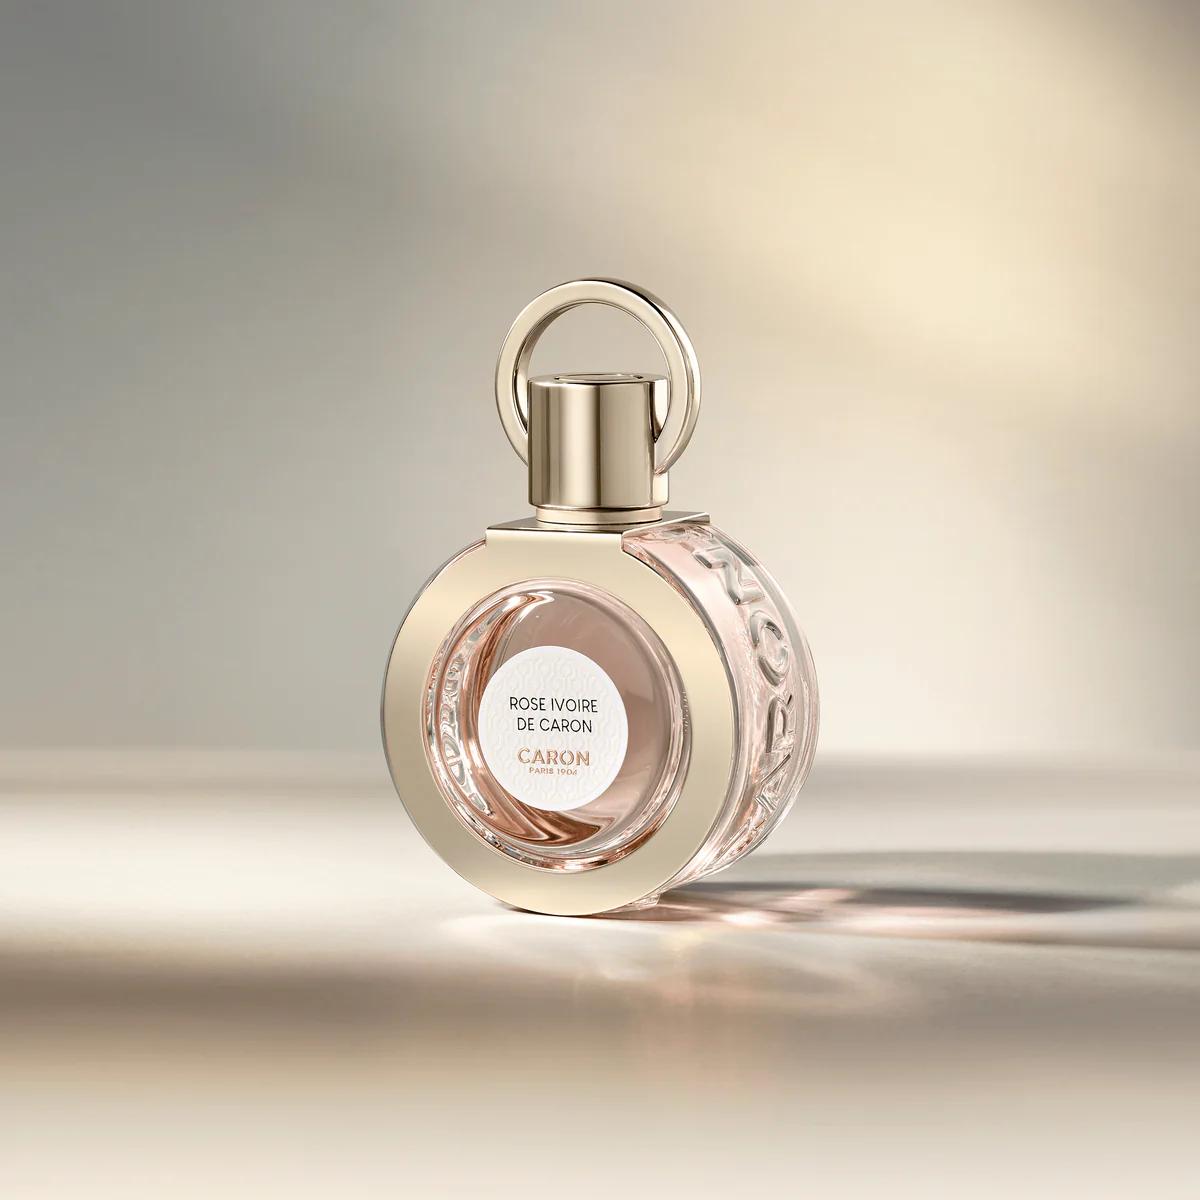 Caron - Rose Ivoire de Caron 50 ml | Perfume Lounge